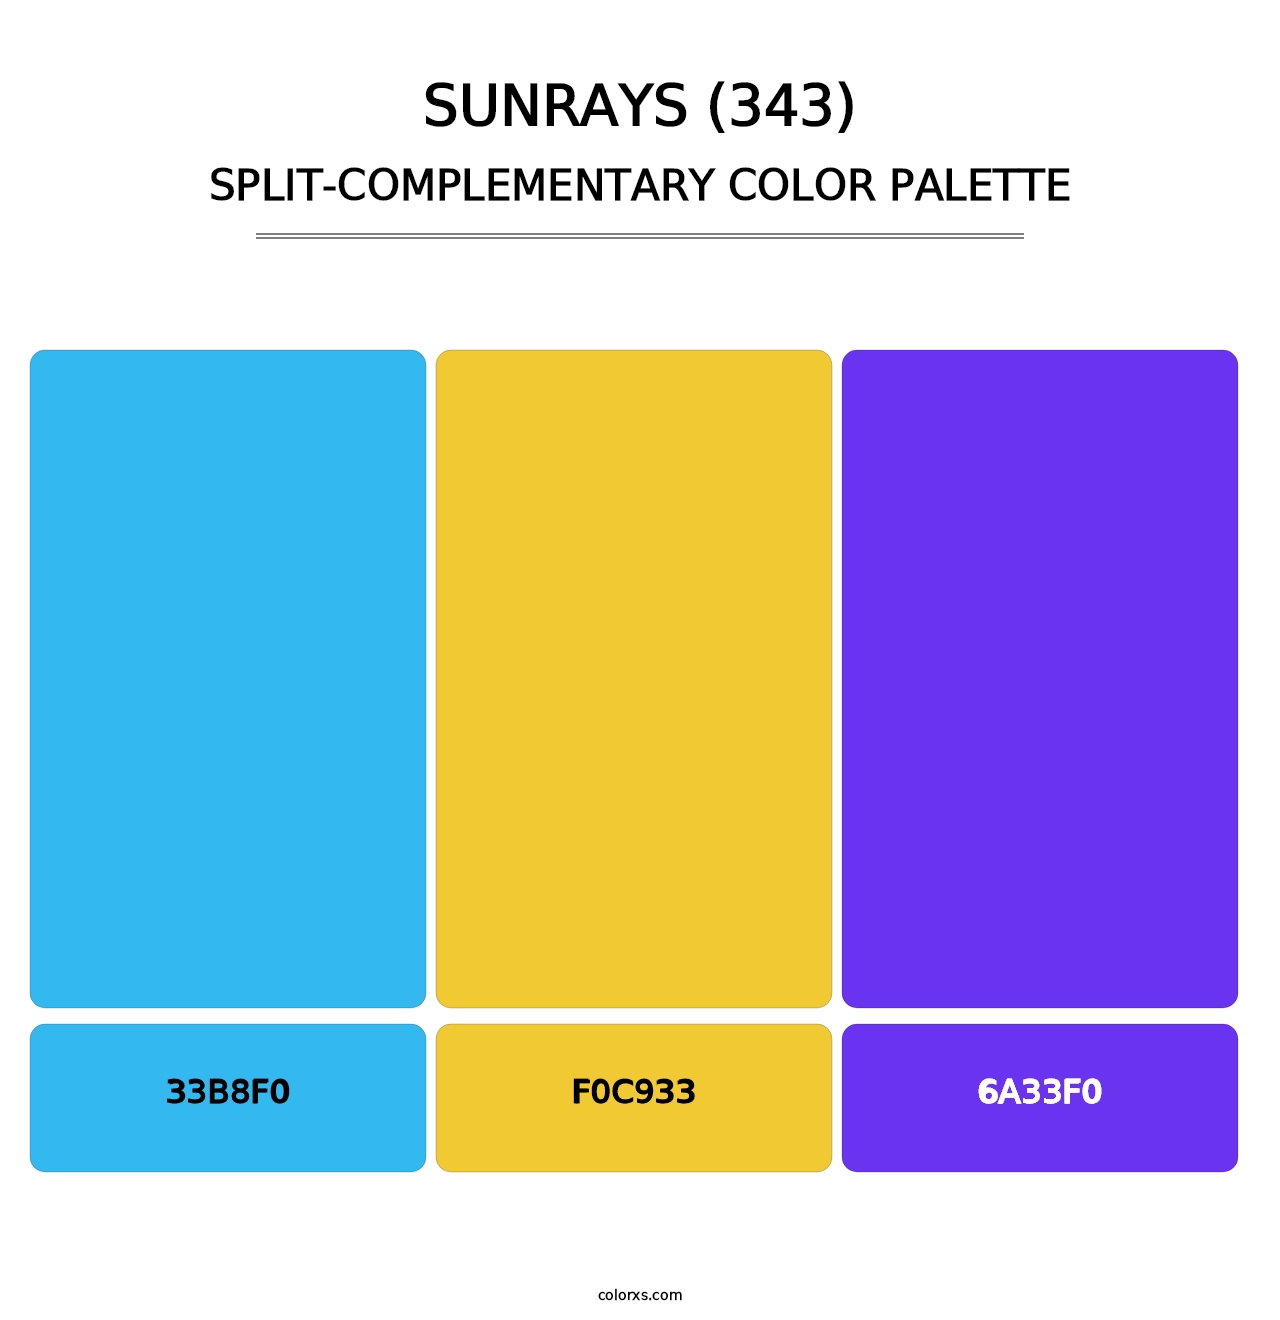 Sunrays (343) - Split-Complementary Color Palette